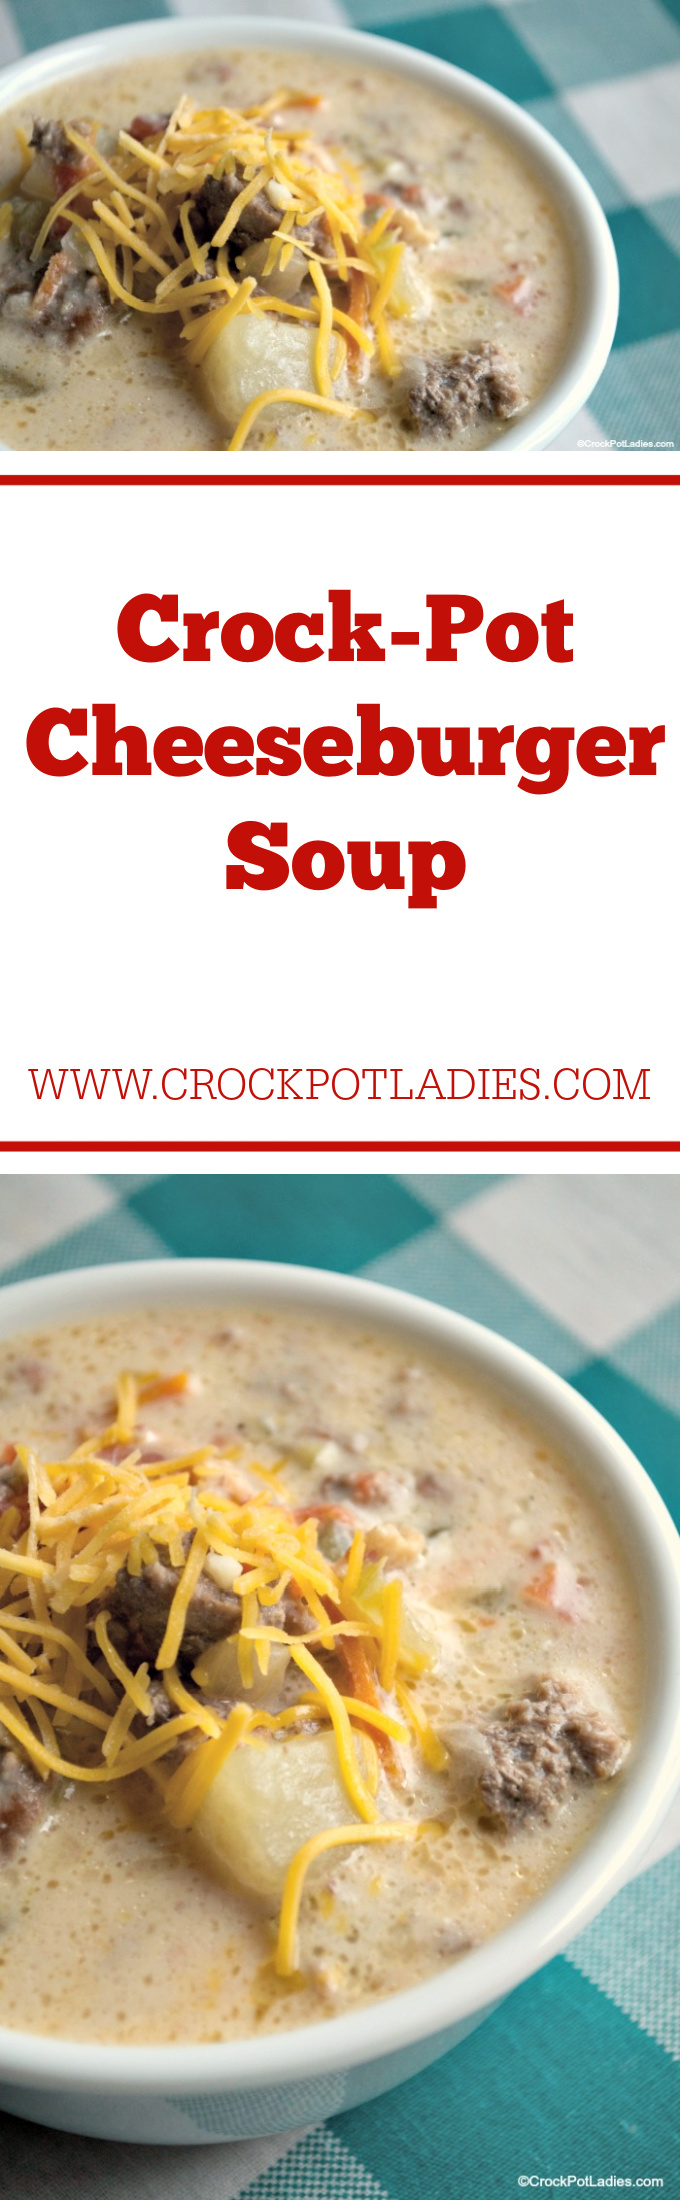 Crock-Pot Cheeseburger Soup